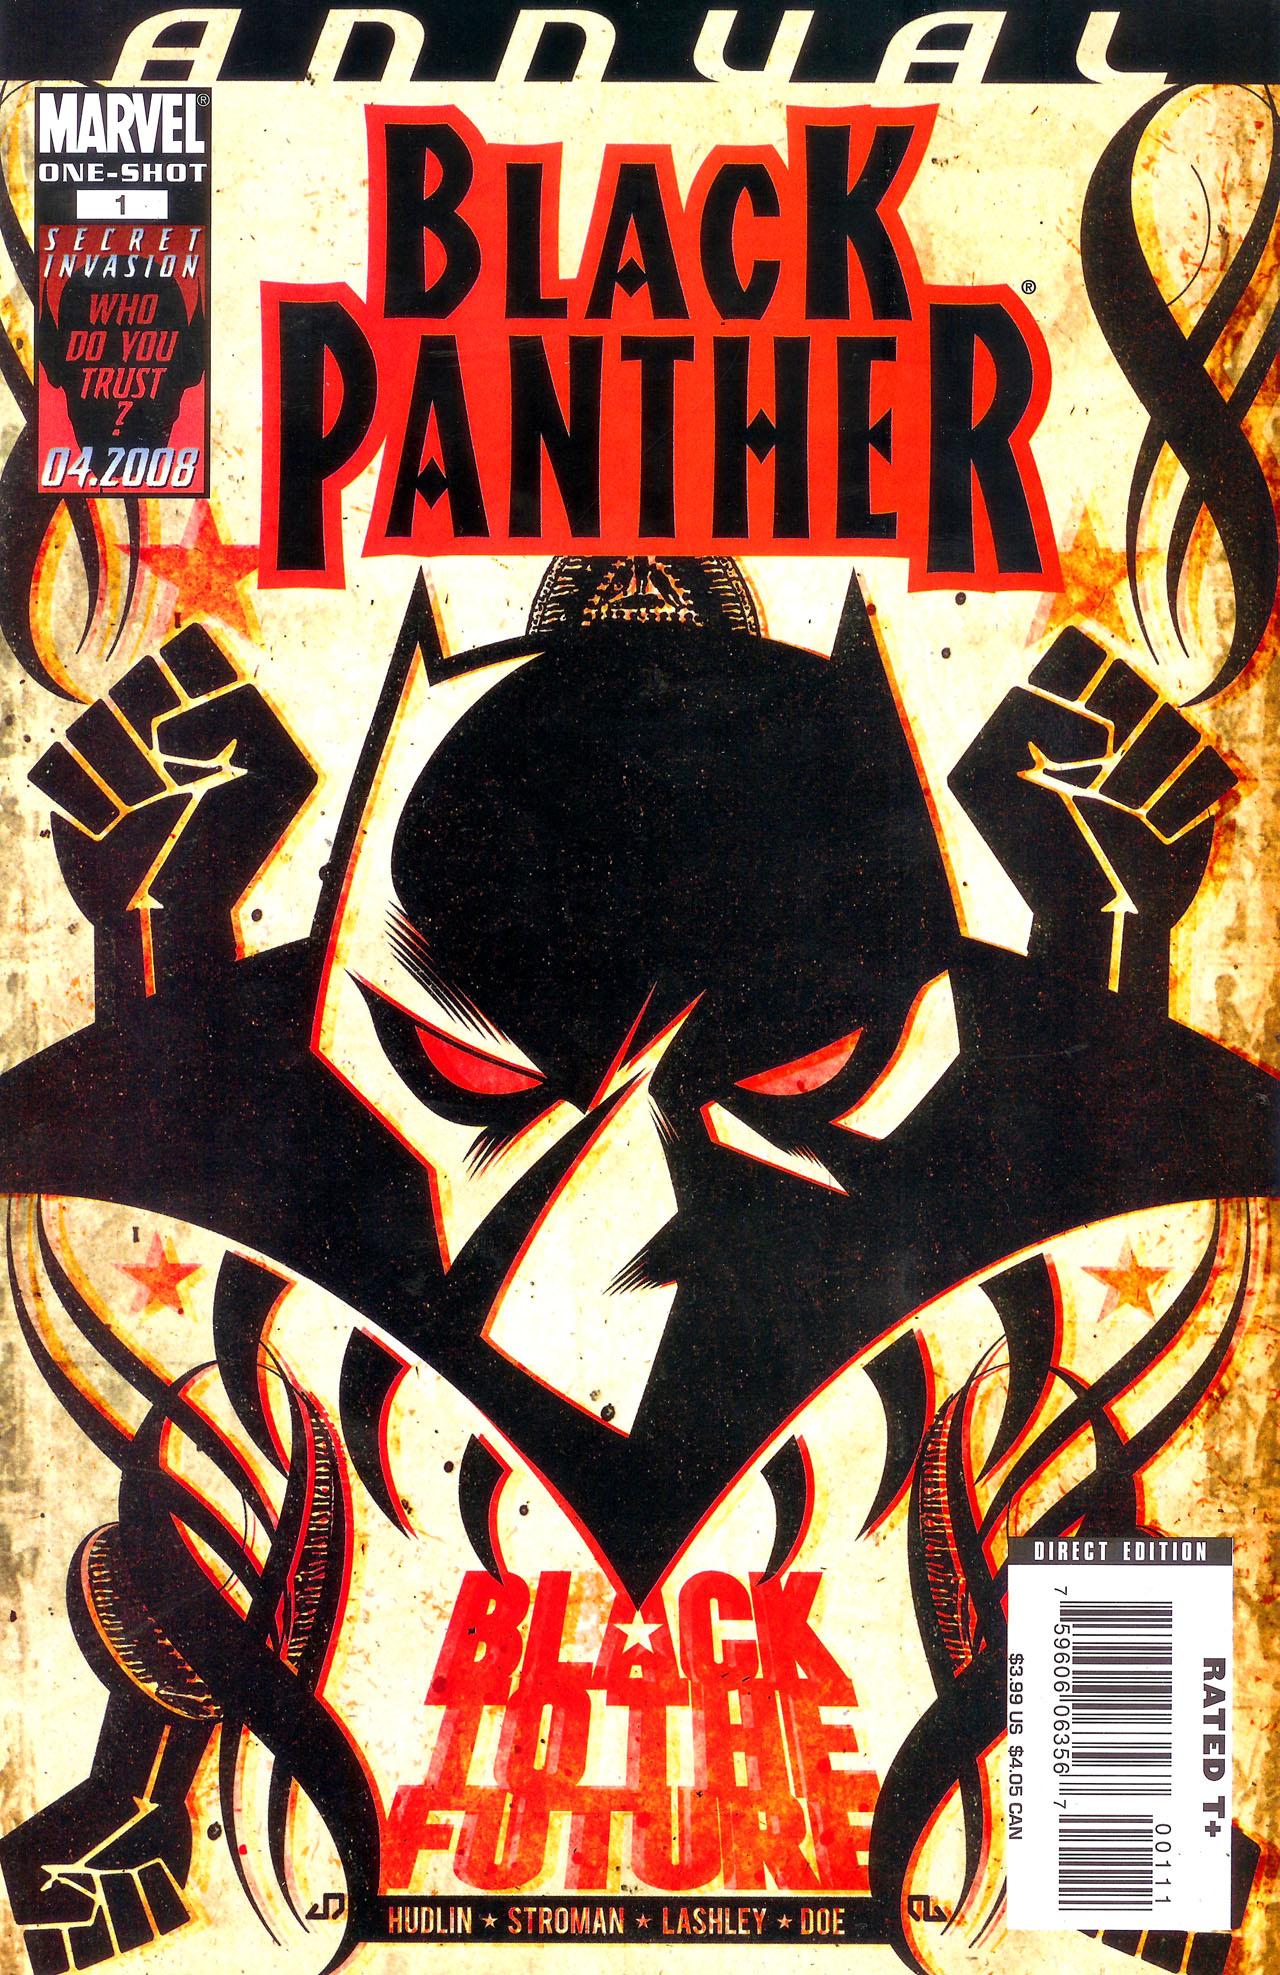 Black Panther Vol. 1 #2008